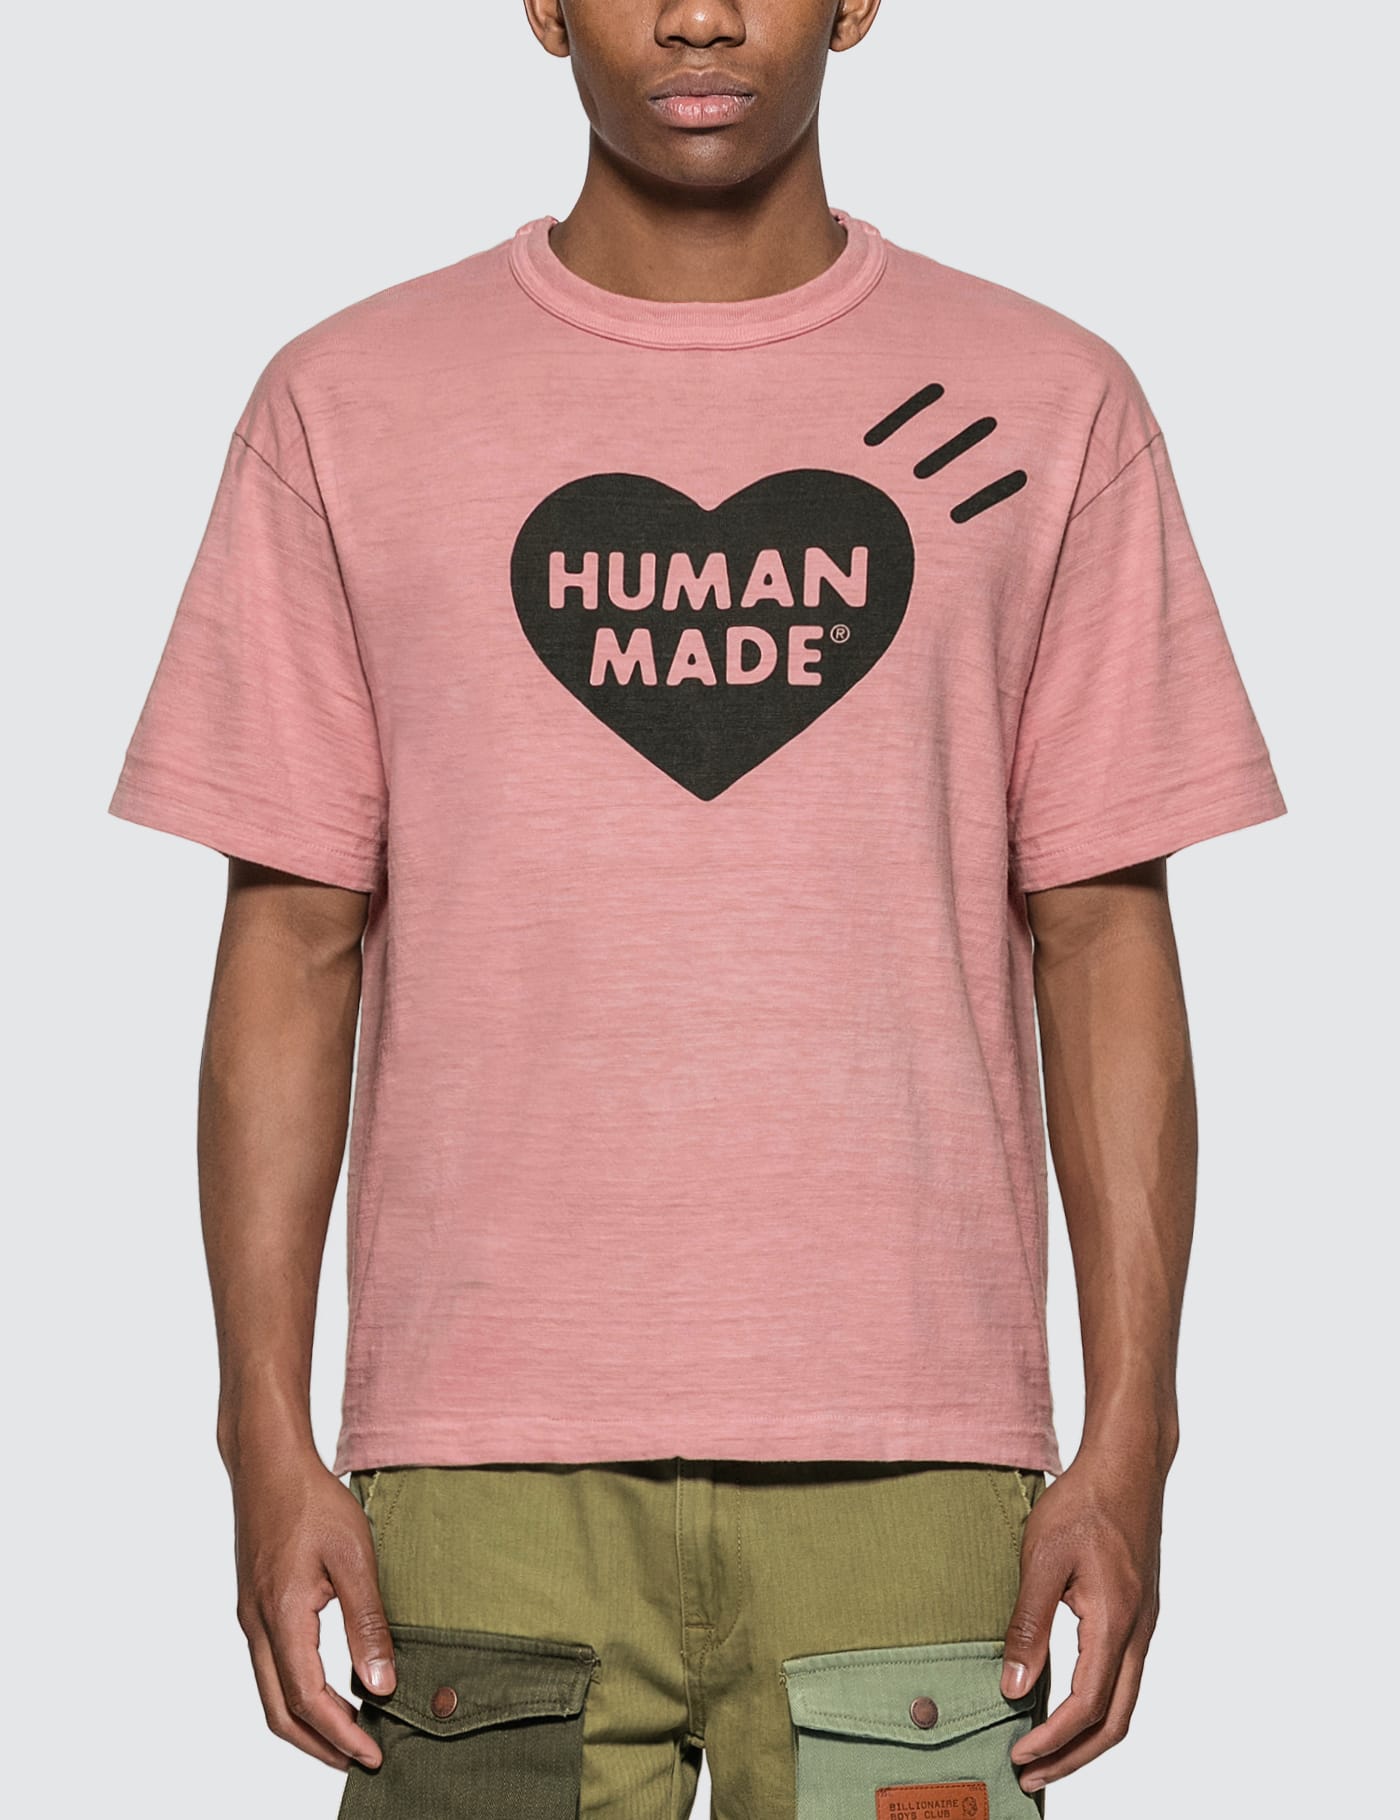 Human Made - Color T-shirt #2 | HBX - HYPEBEAST 為您搜羅全球潮流 